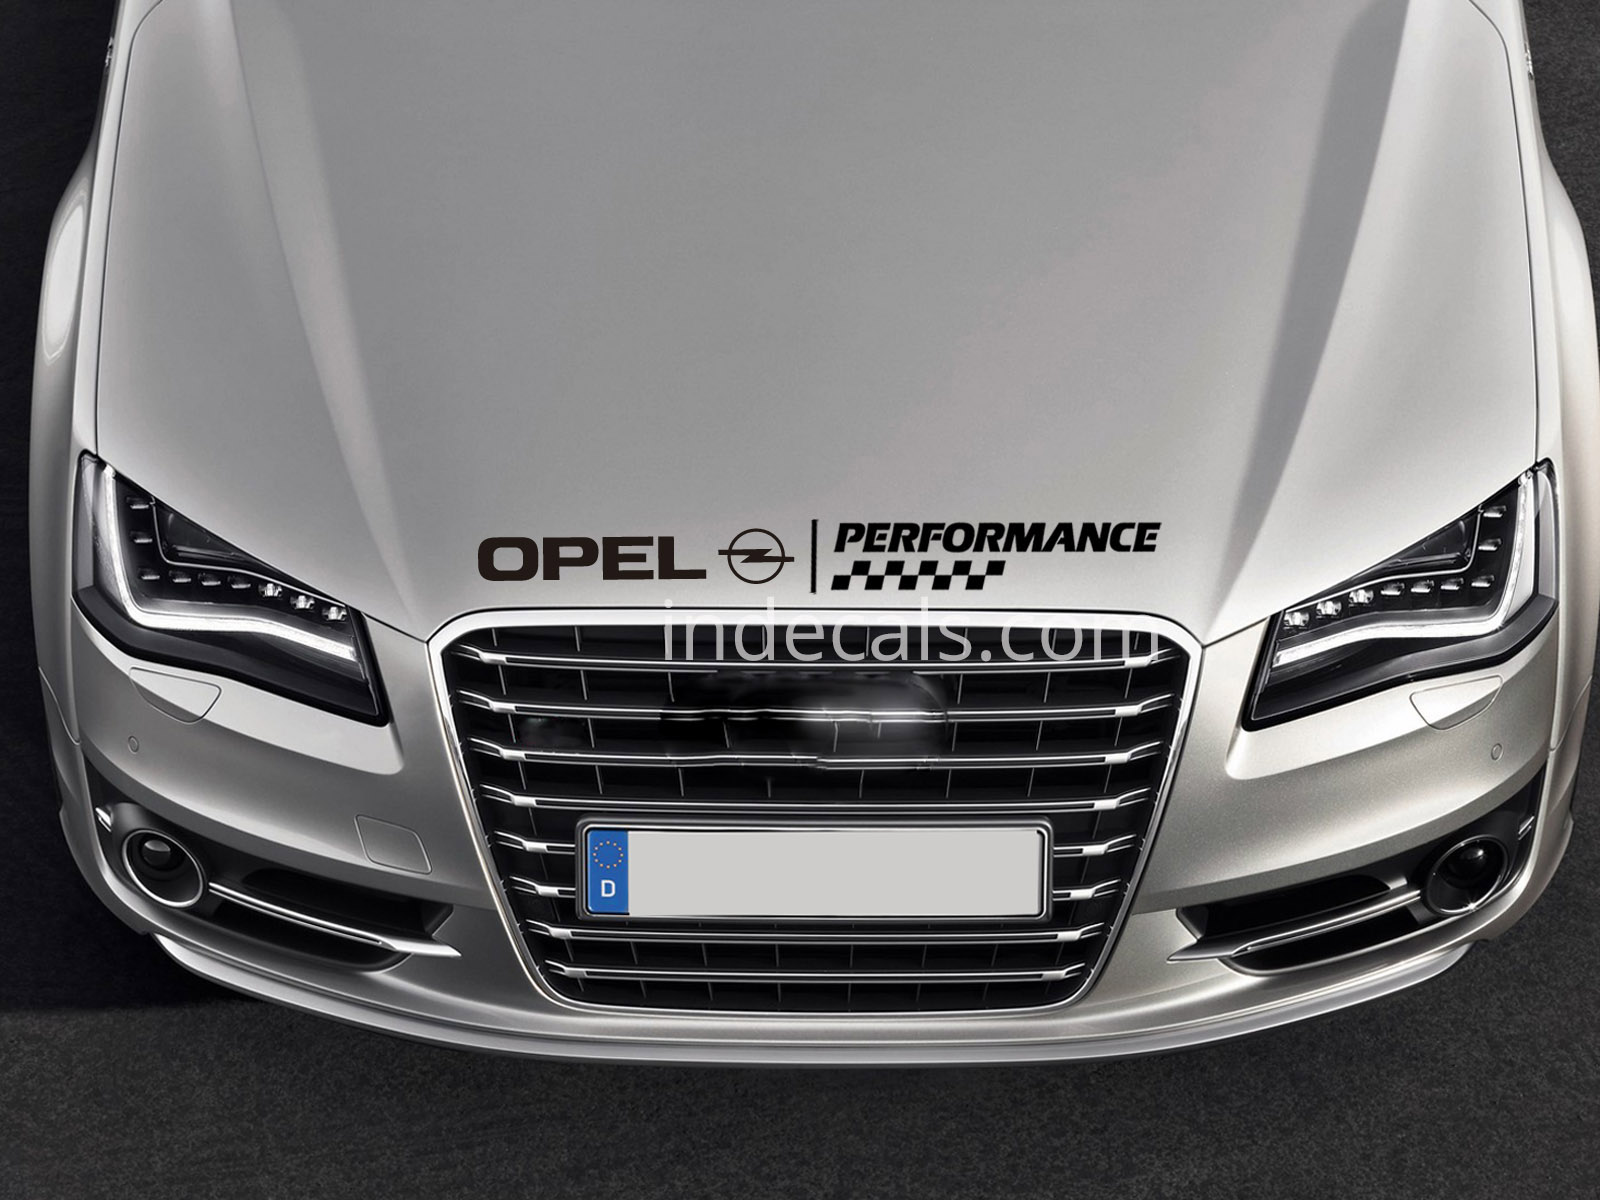 1 x Opel Performance Sticker for Bonnet - Black